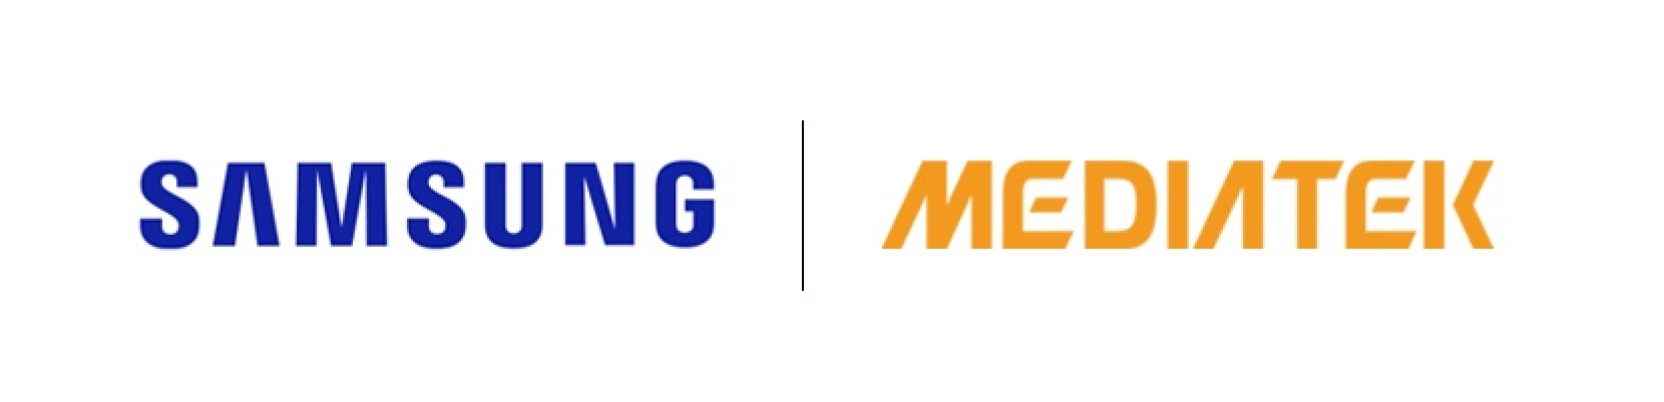 Samsung Electronics, MediaTek logo